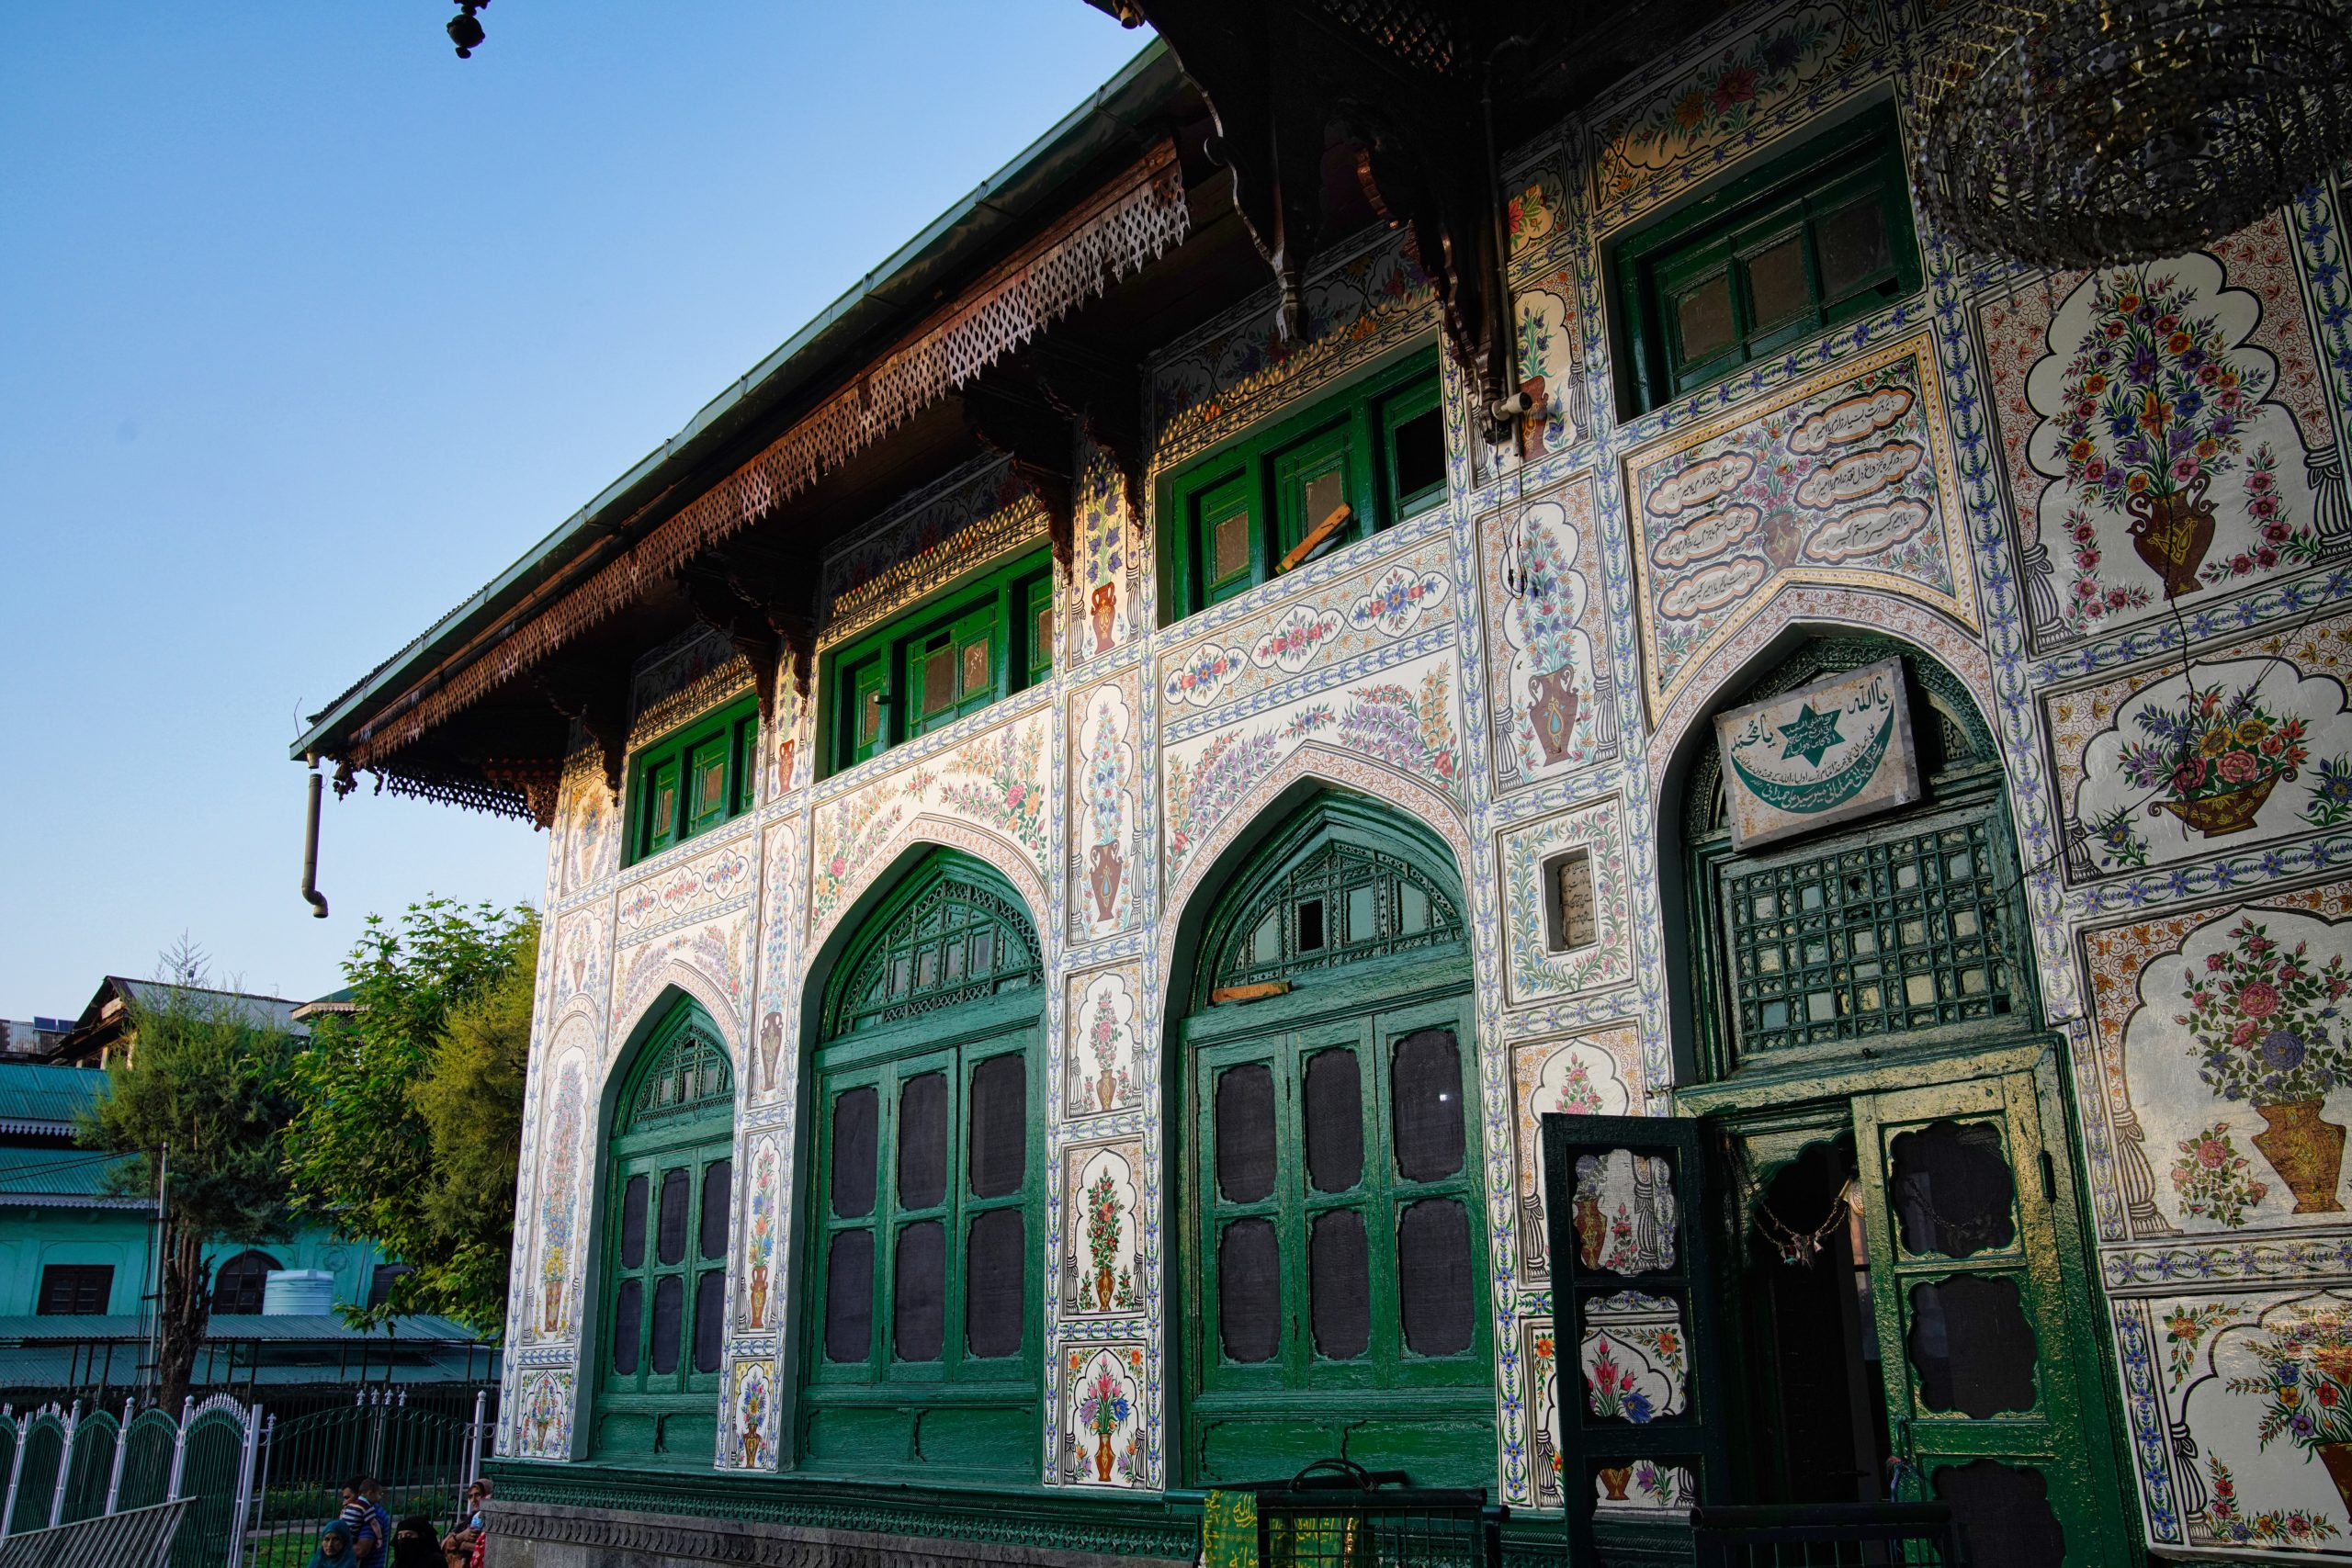 Architecture-of-Kashmir-02